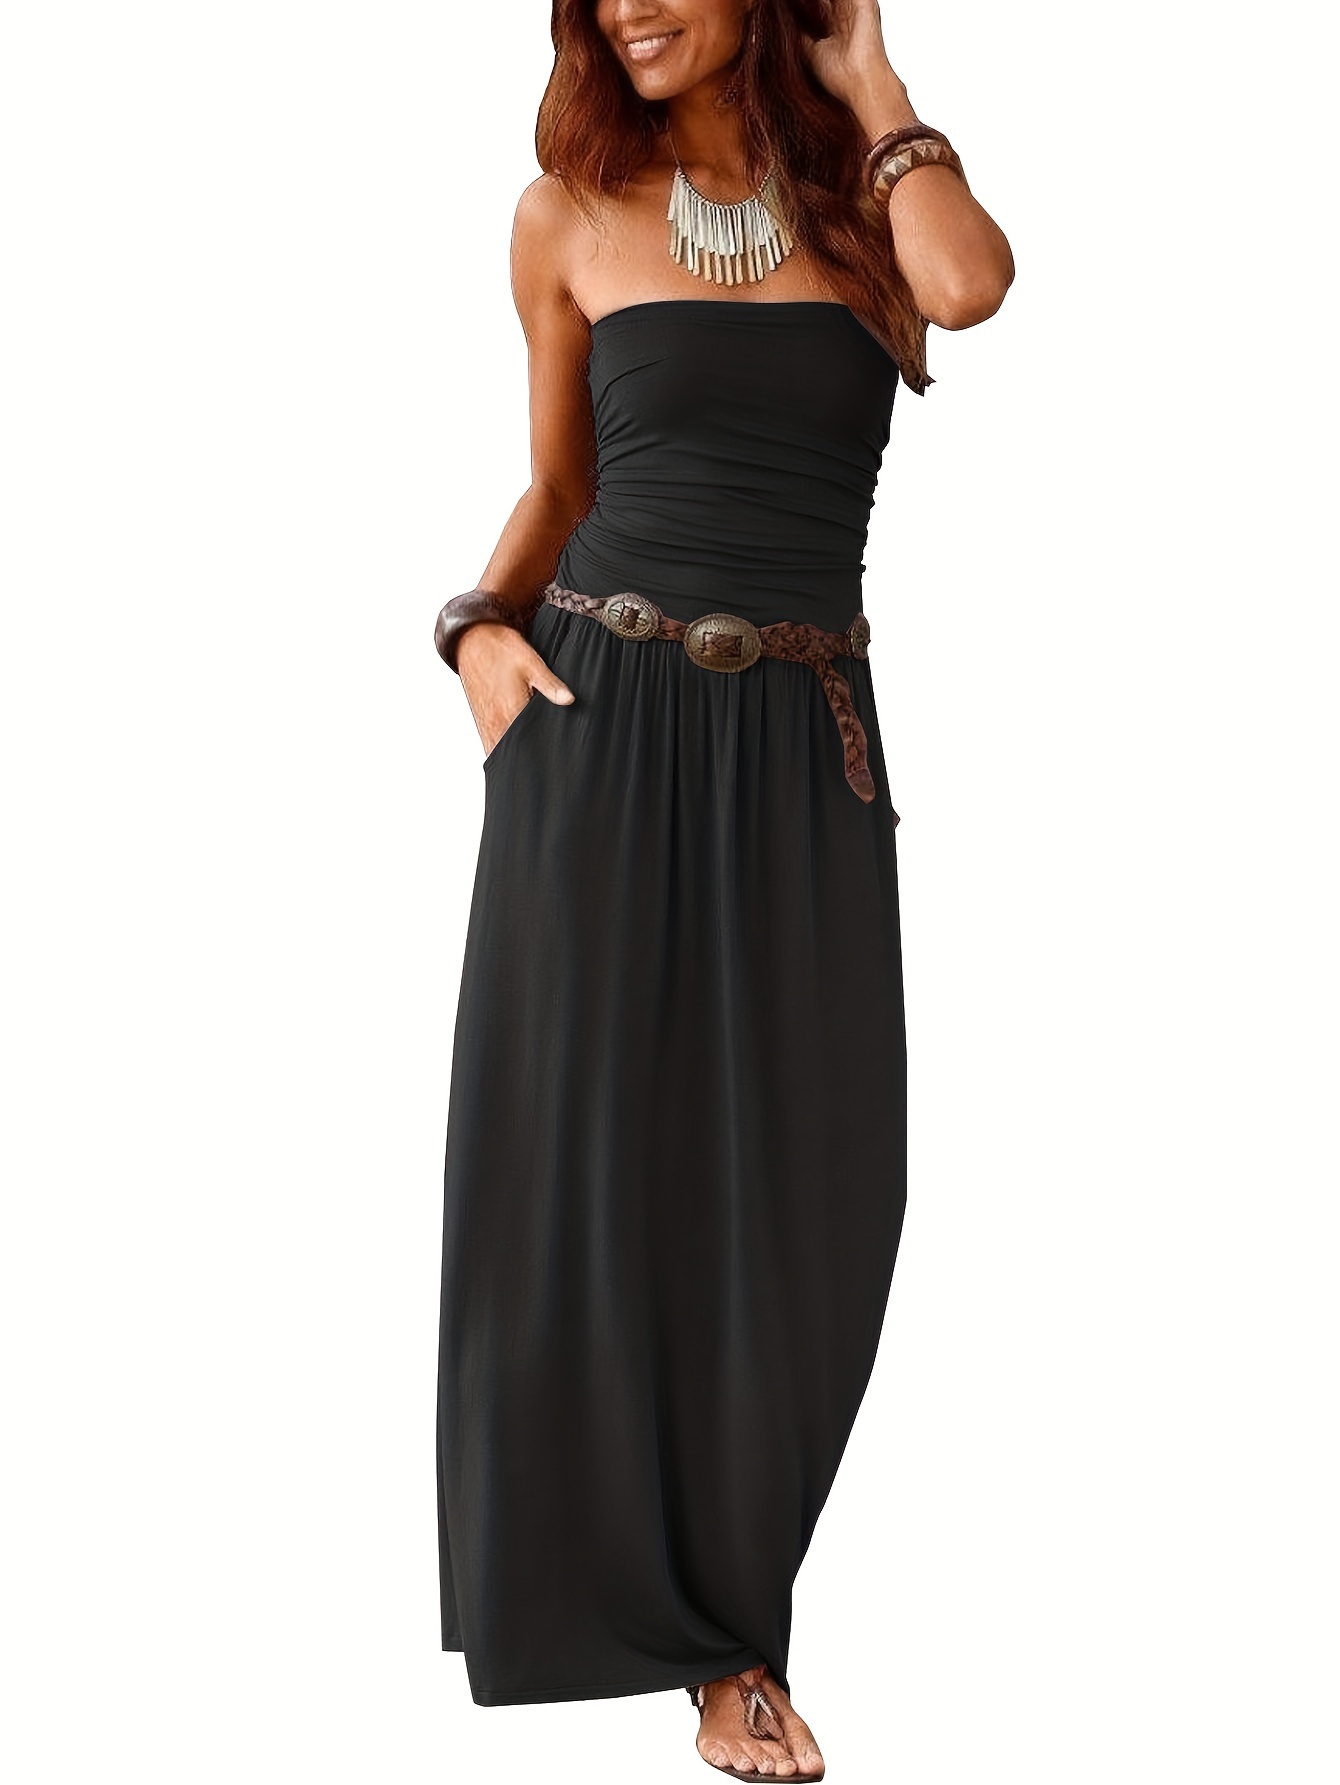 solid slim tube dress versatile strapless pockets ruffle hem dress for spring summer womens clothing